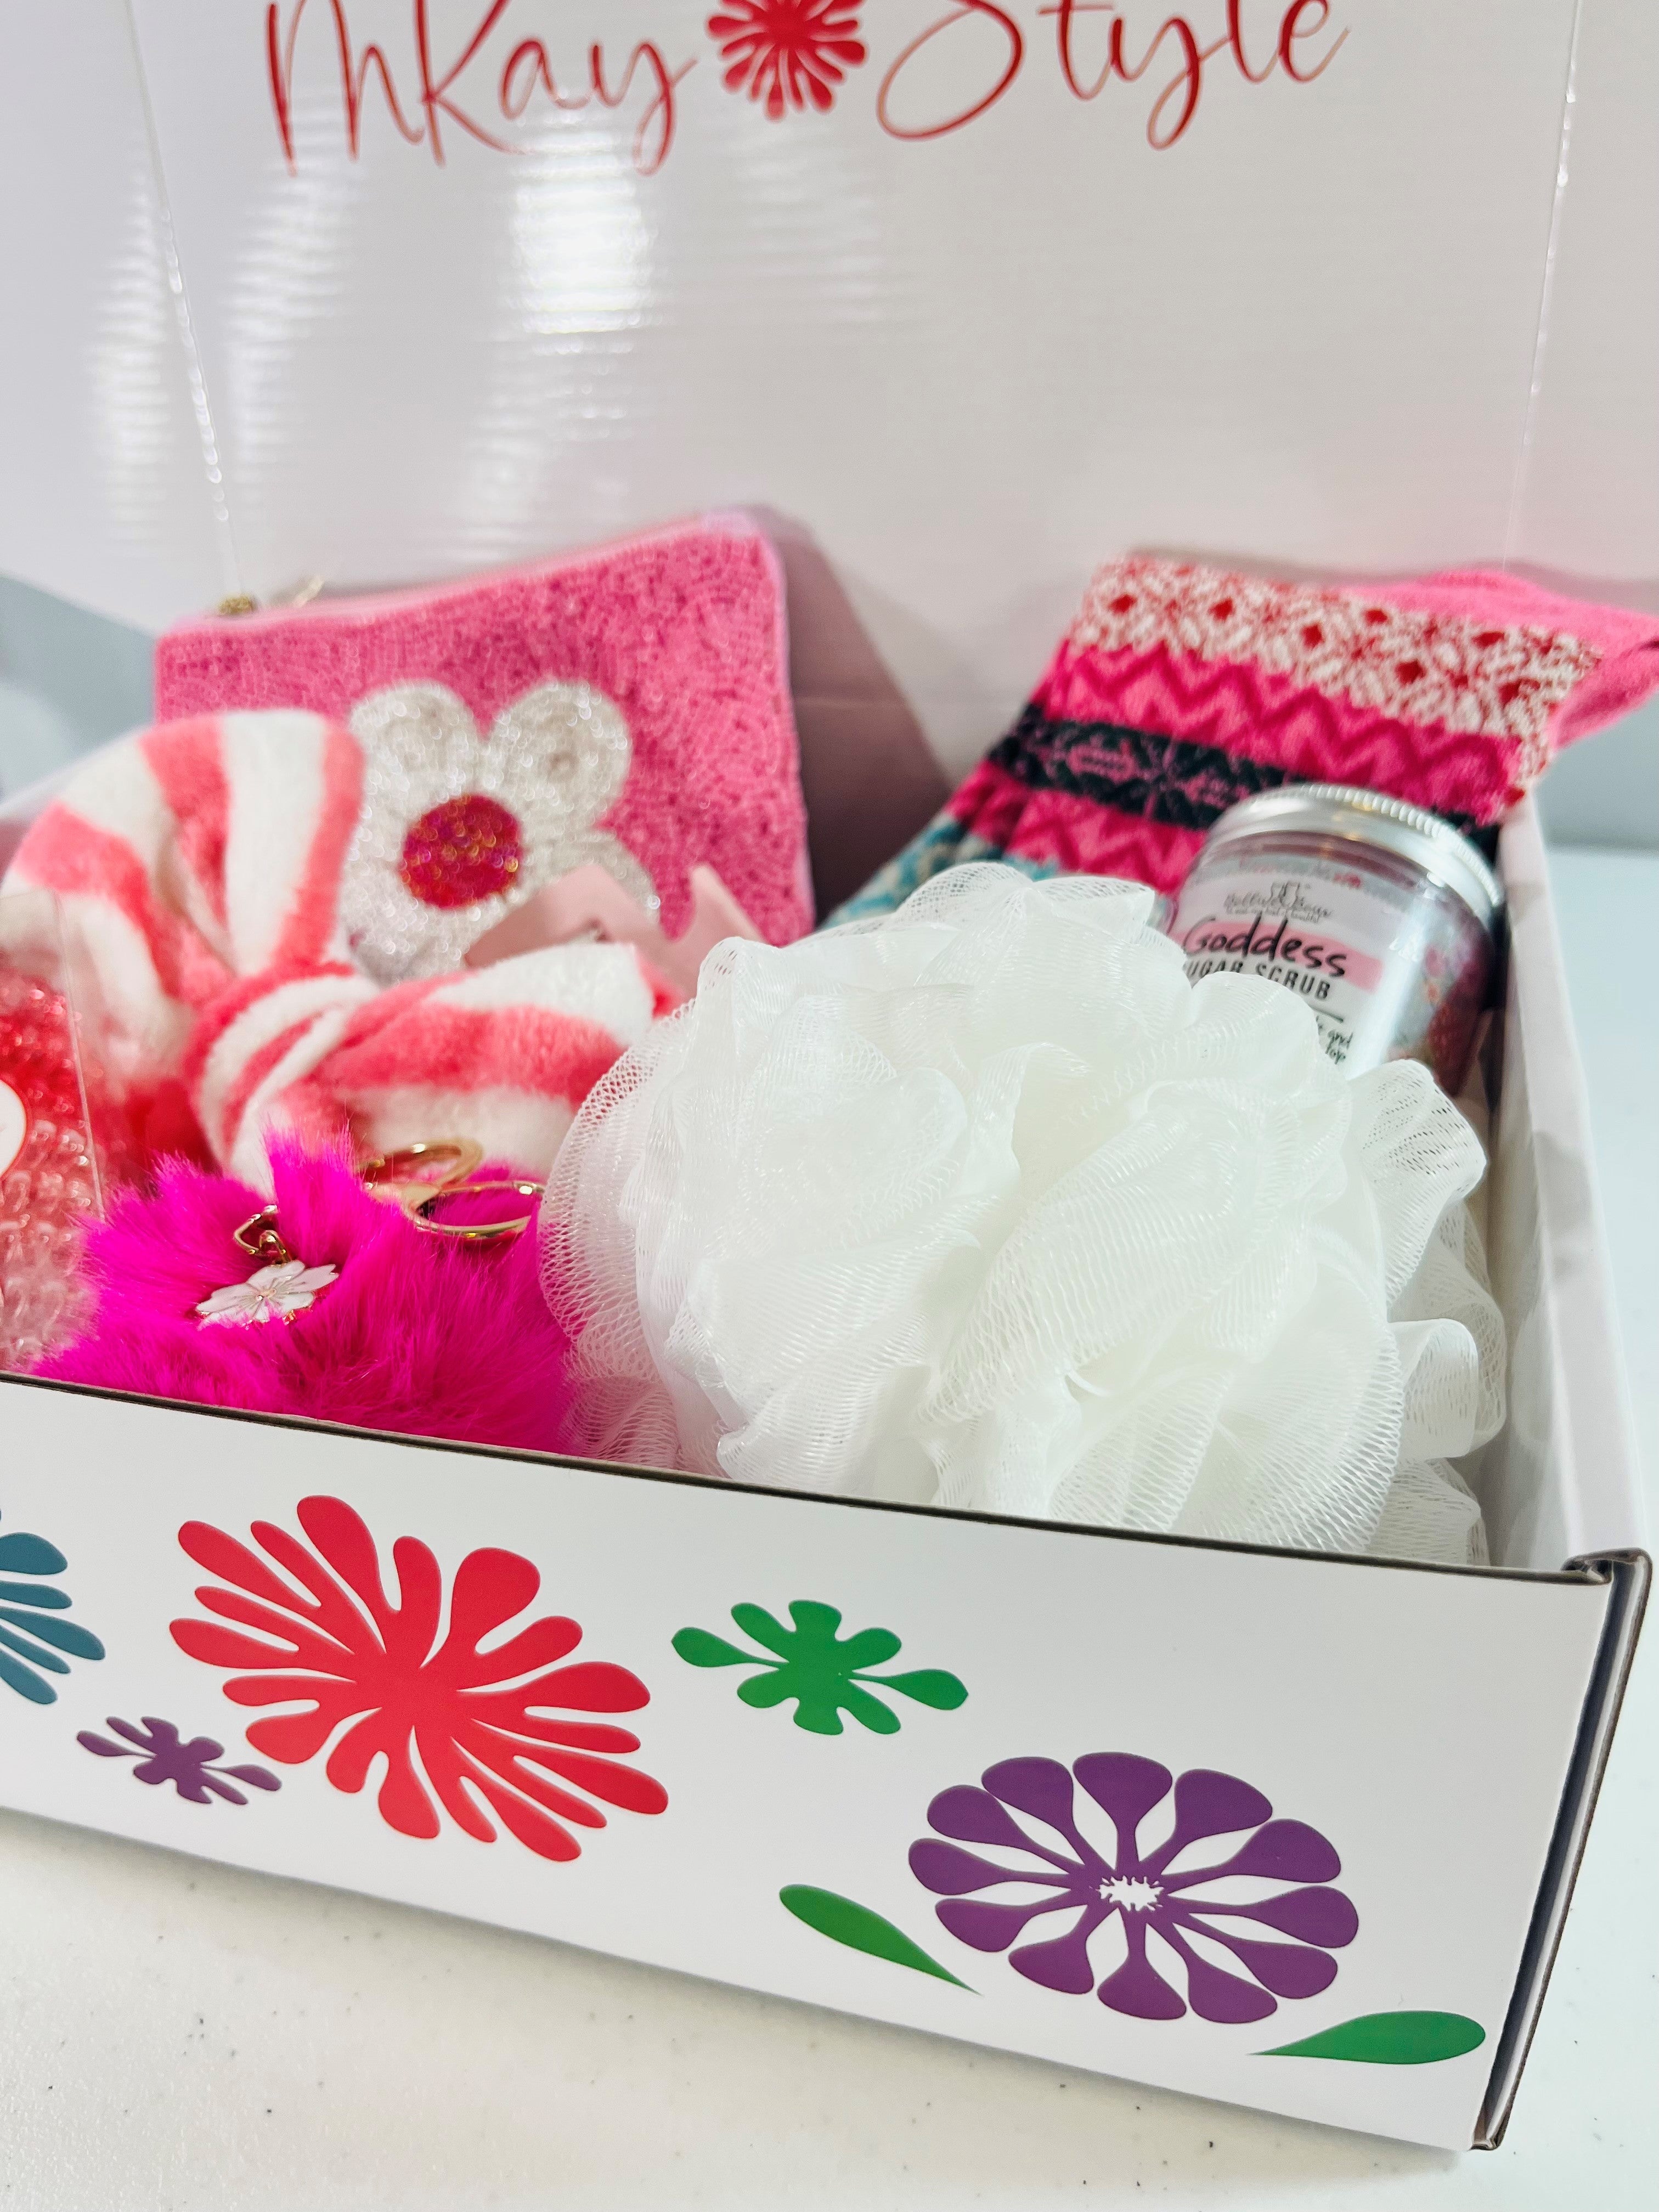 Pink Glam Girl Gift Box